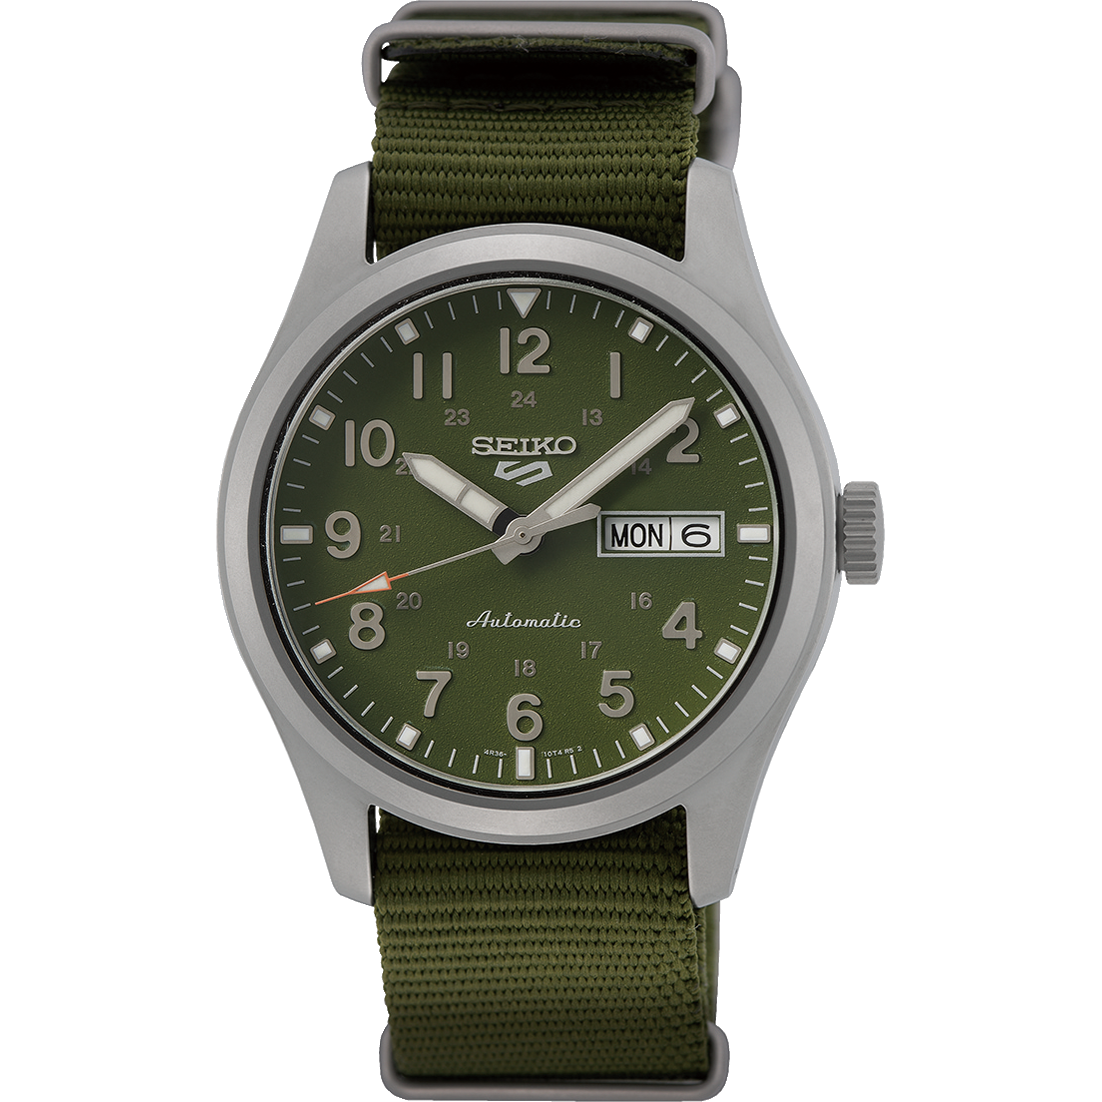 Seiko Military Green Dial Automatic Watch SRPG33K – Watch Direct Australia